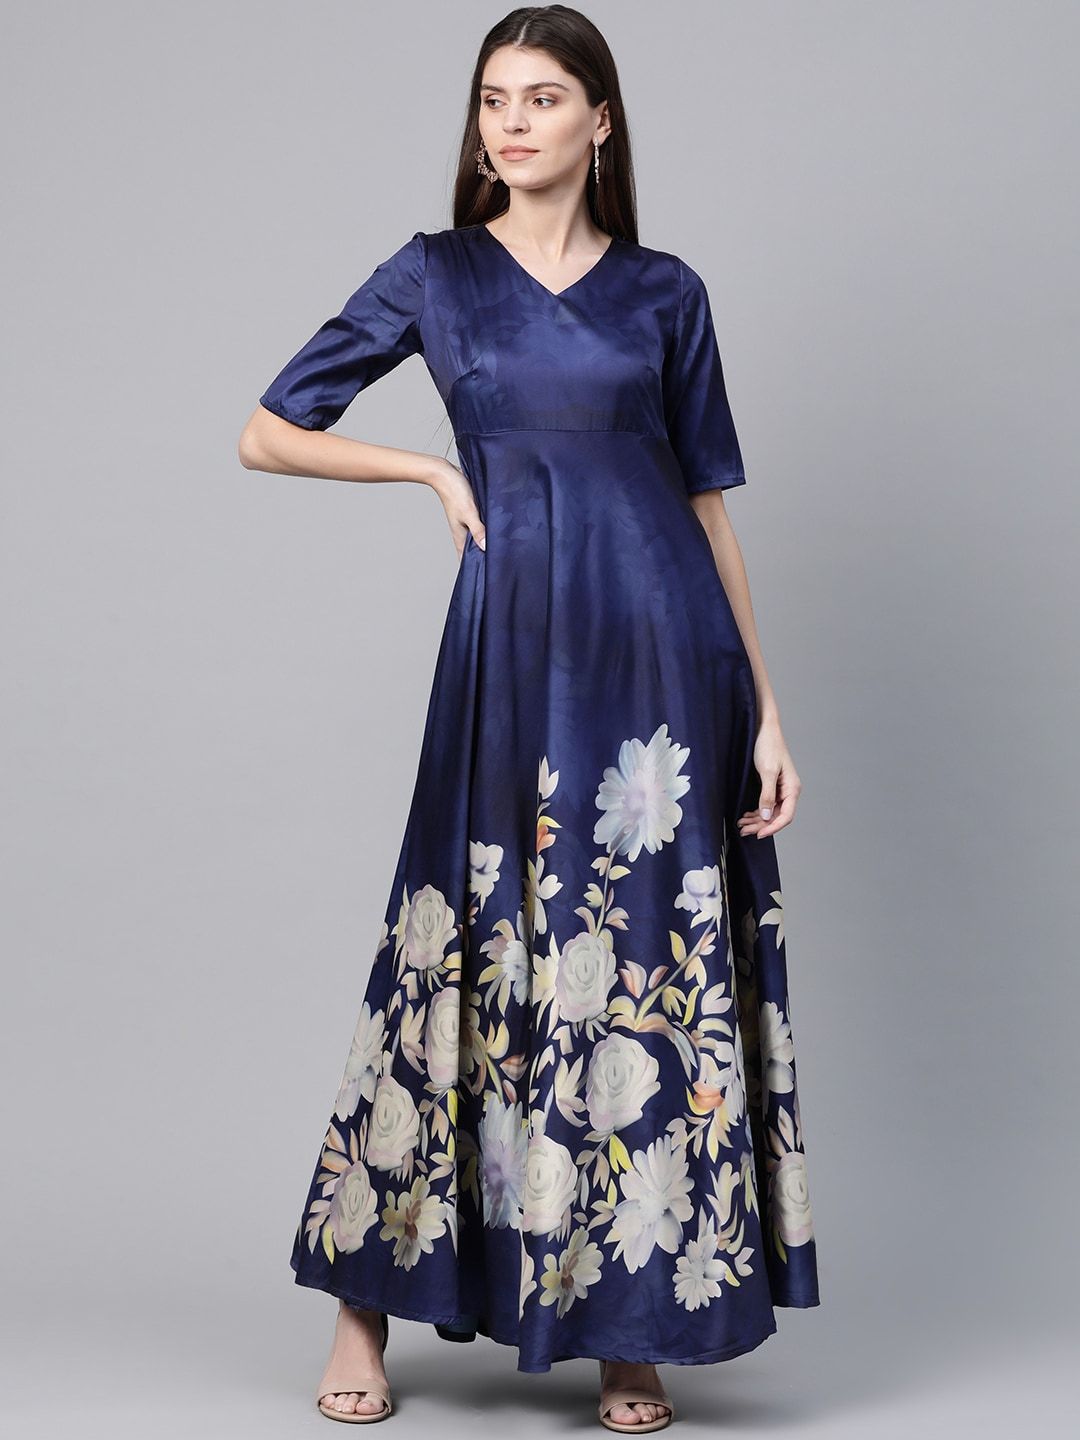 Women's  Navy Blue & White Digital Floral Print Maxi Dress - AKS